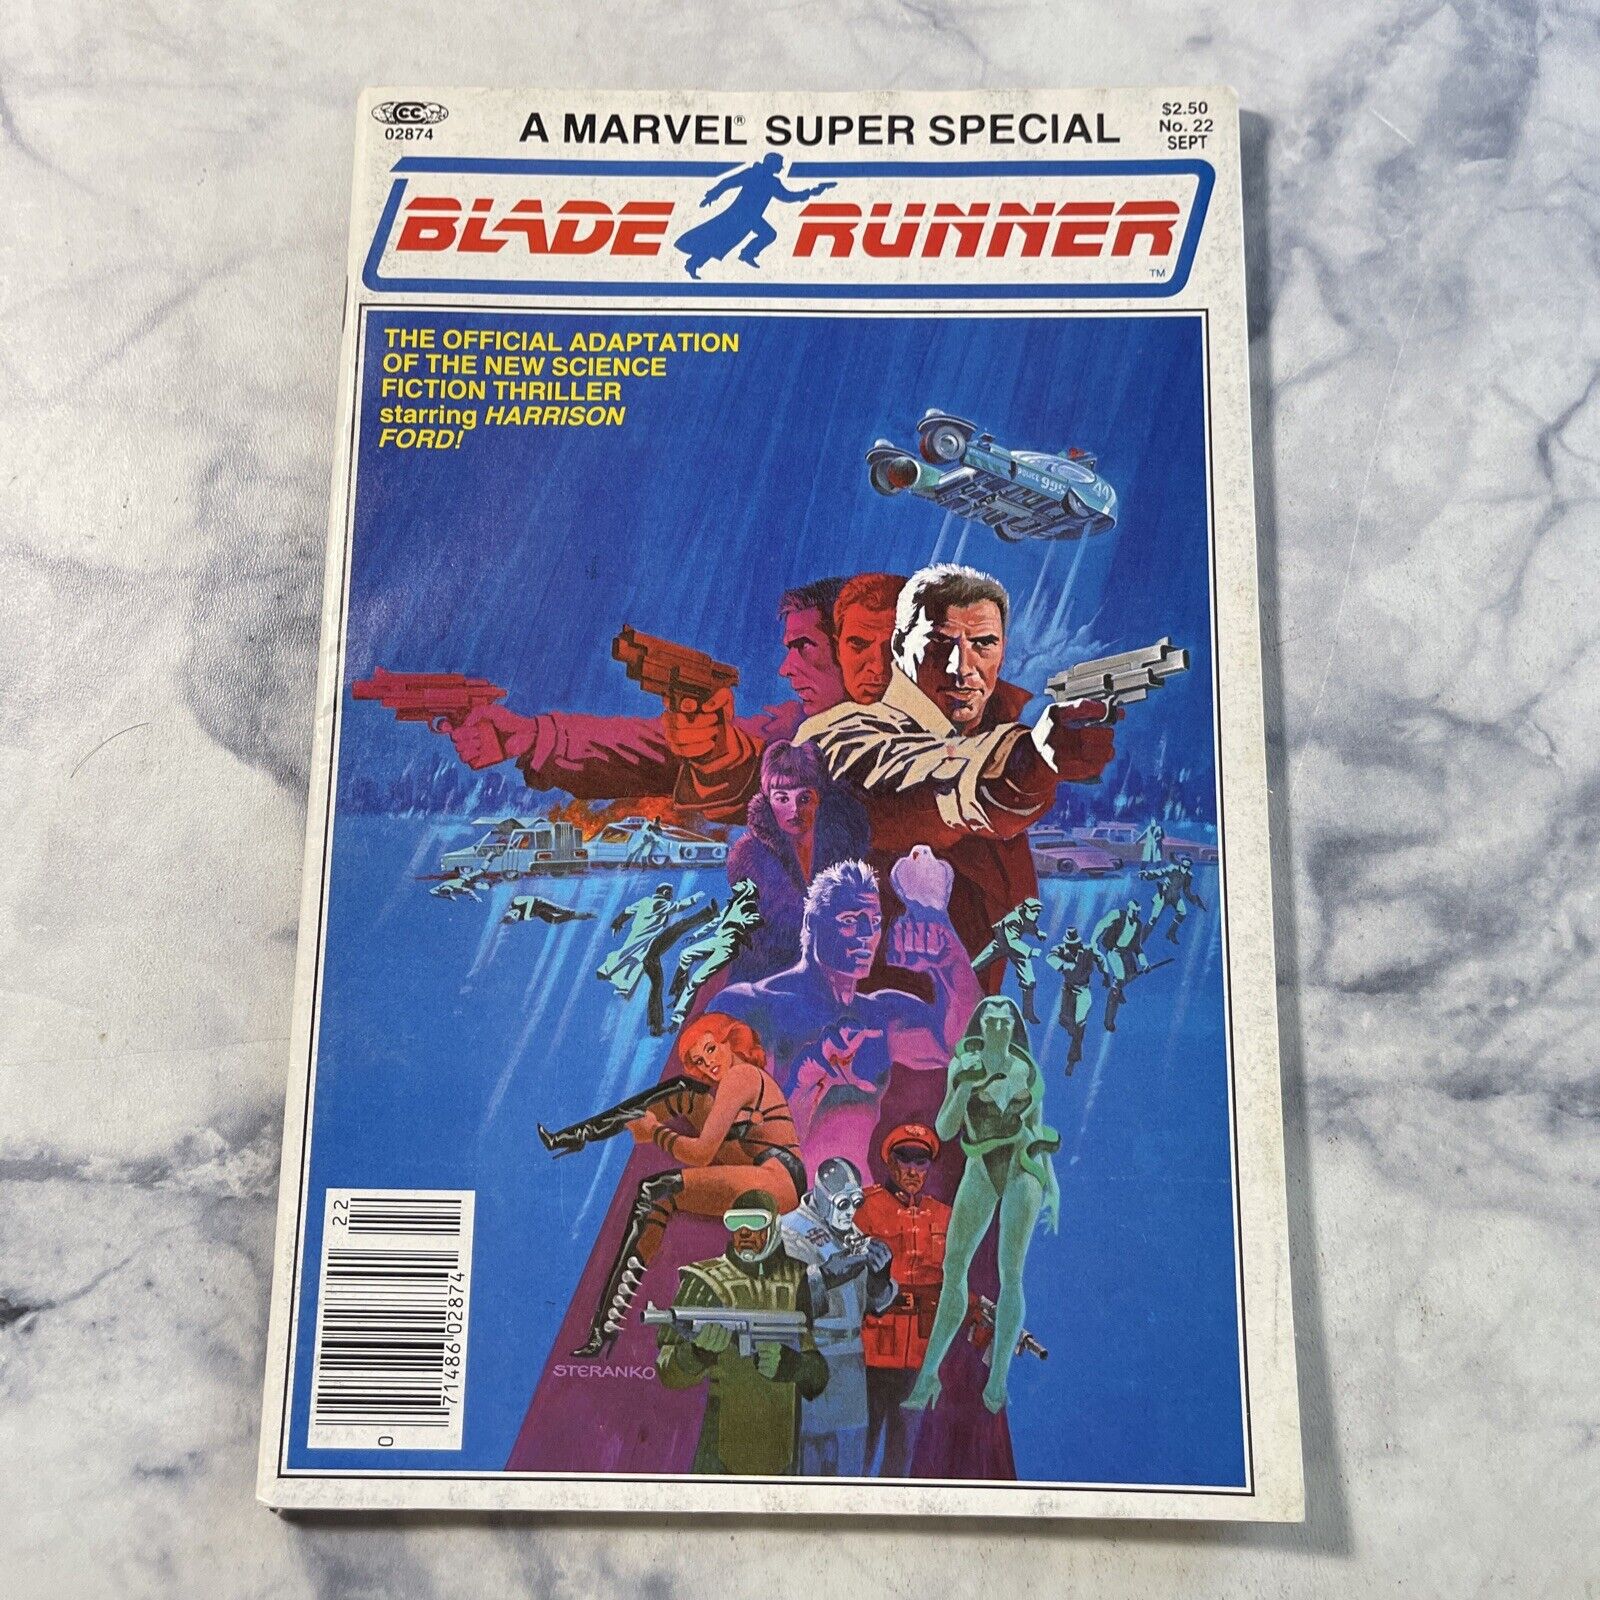 Marvel Comics Super Special Blade Runner Comic Book Issue #22 1982